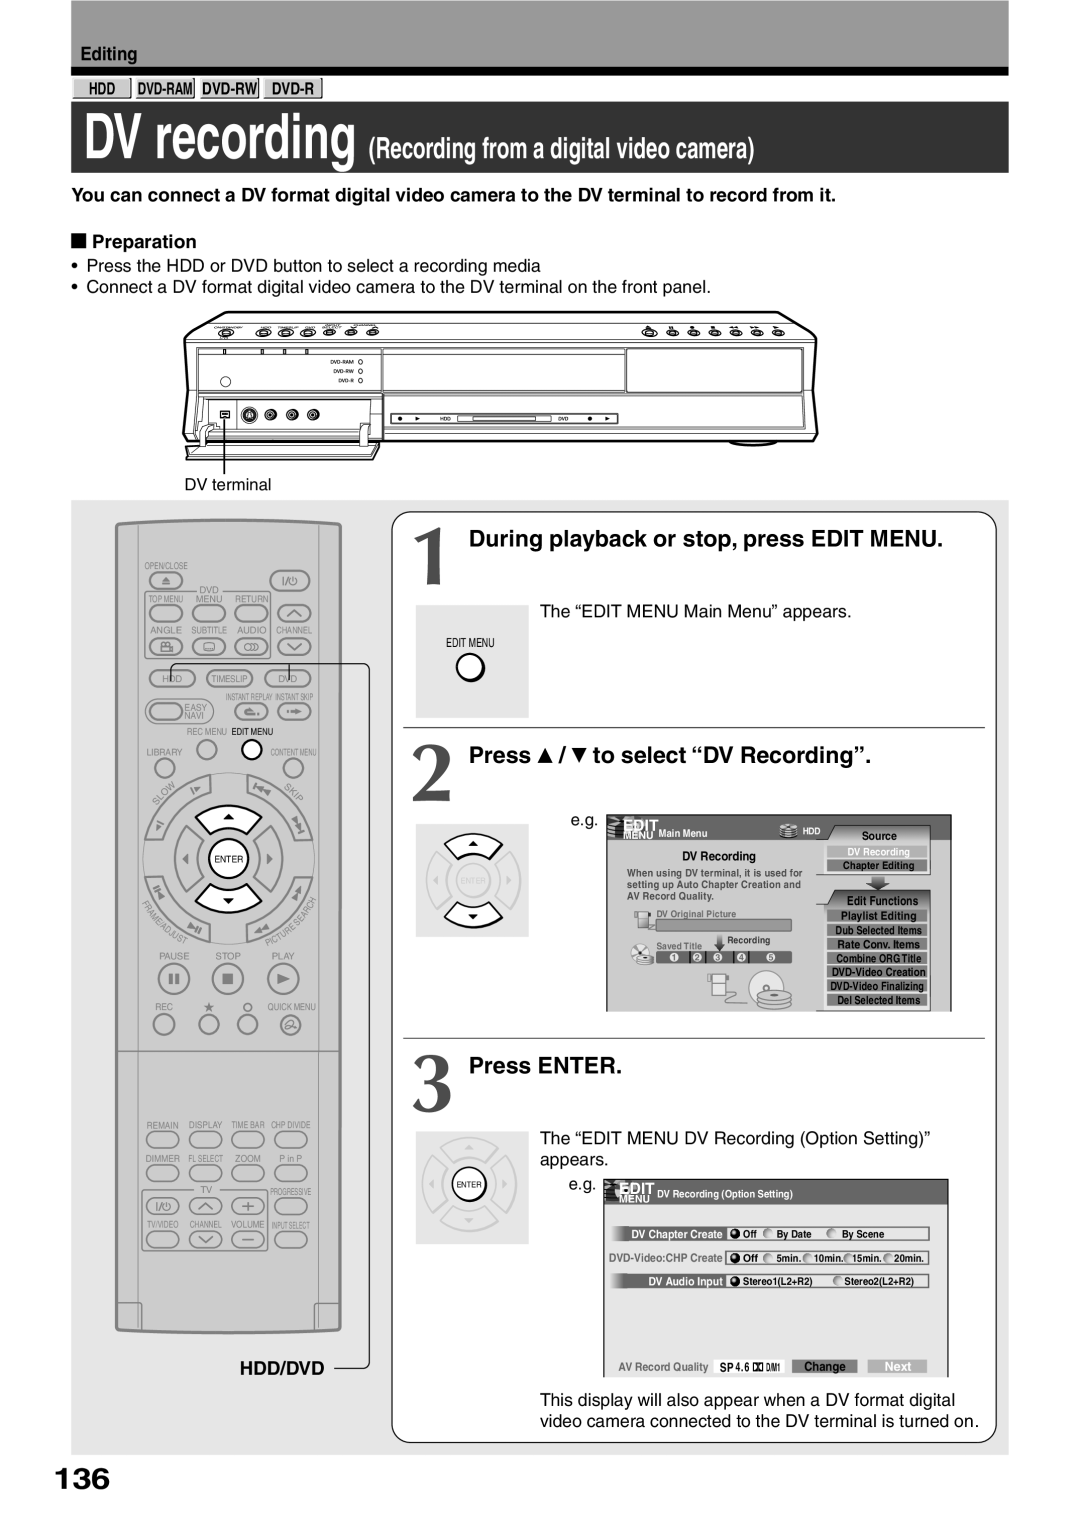 Toshiba RD-XS32SC Press / to select “DV Recording”, Press ENTER, During playback or stop, press EDIT MENU, Editing, Change 